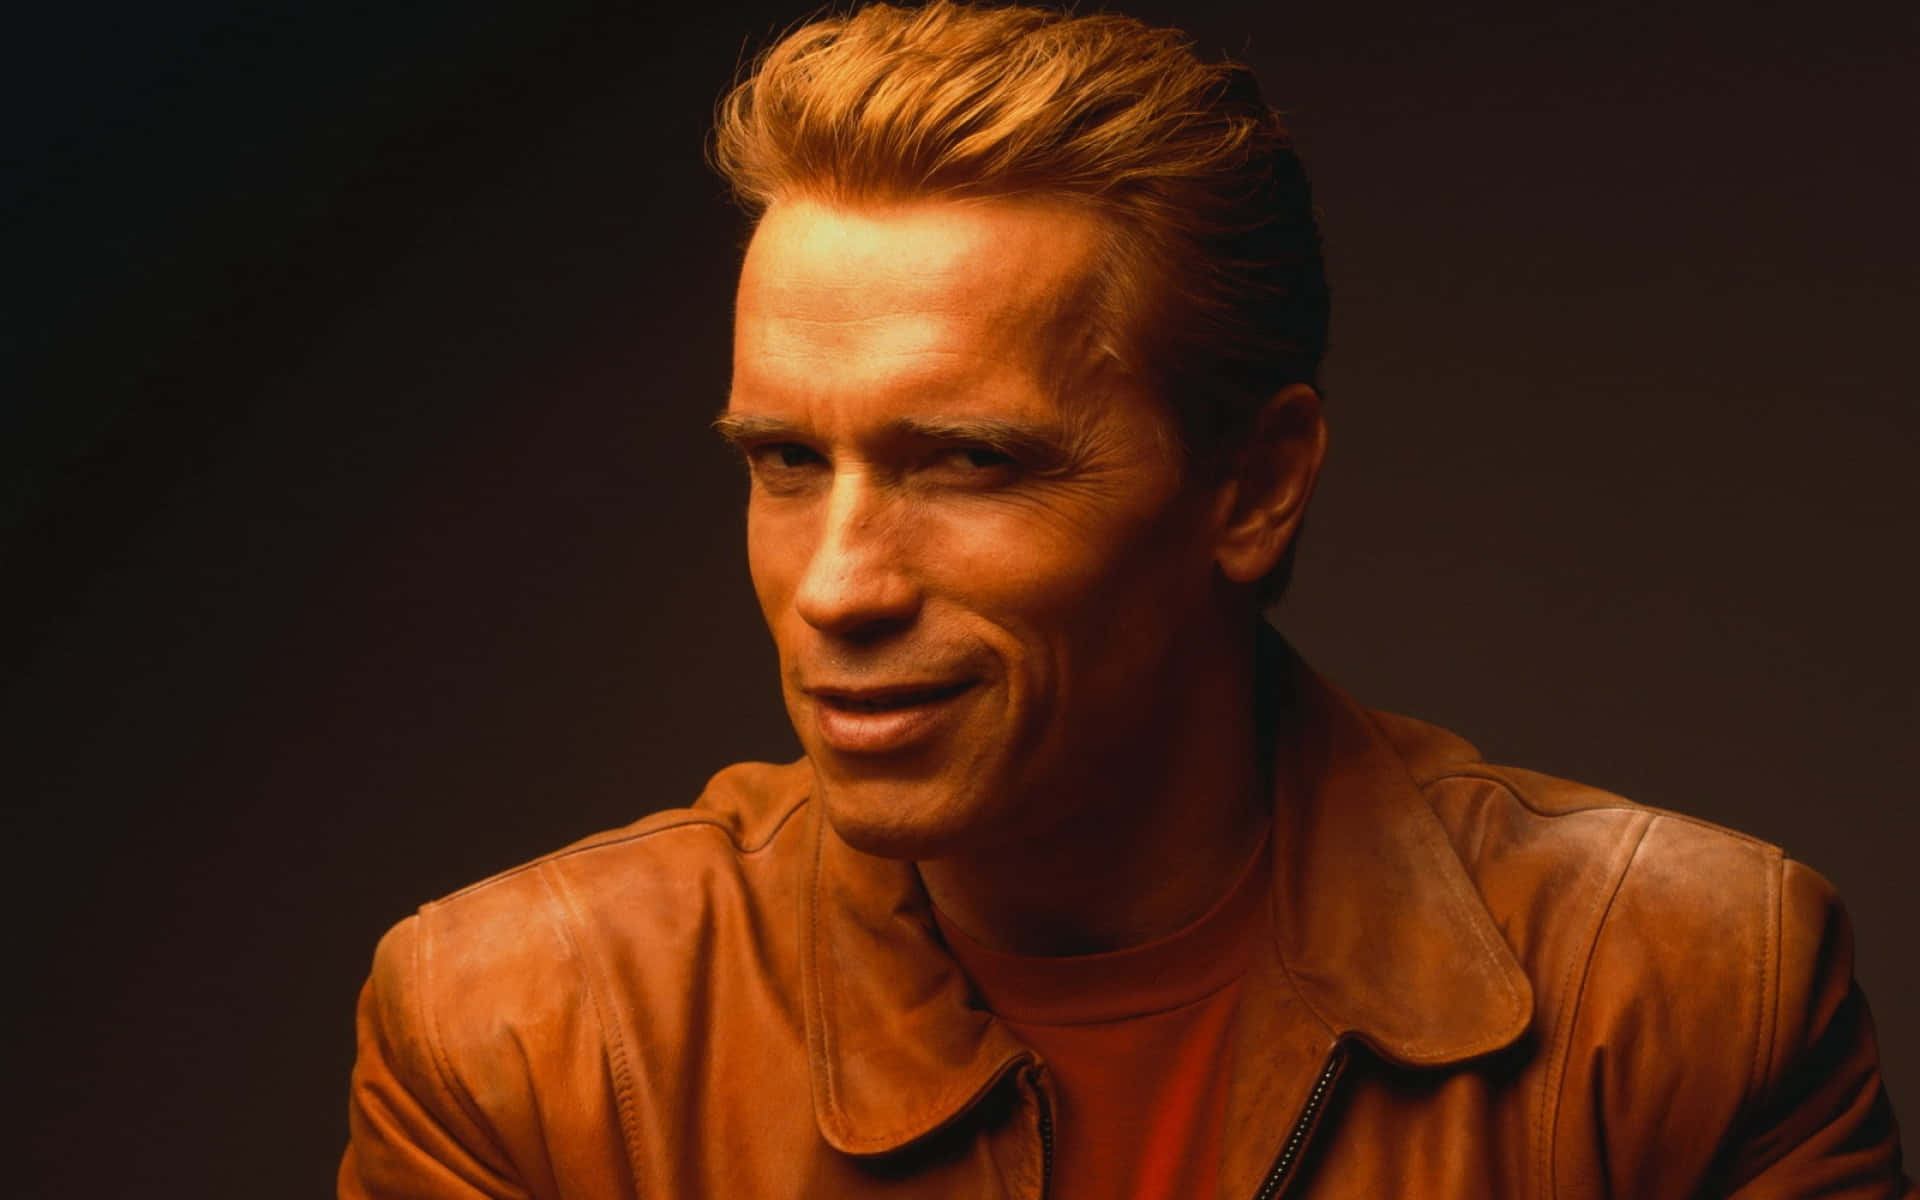 Legendary Actor and former Governor Arnold Schwarzenegger